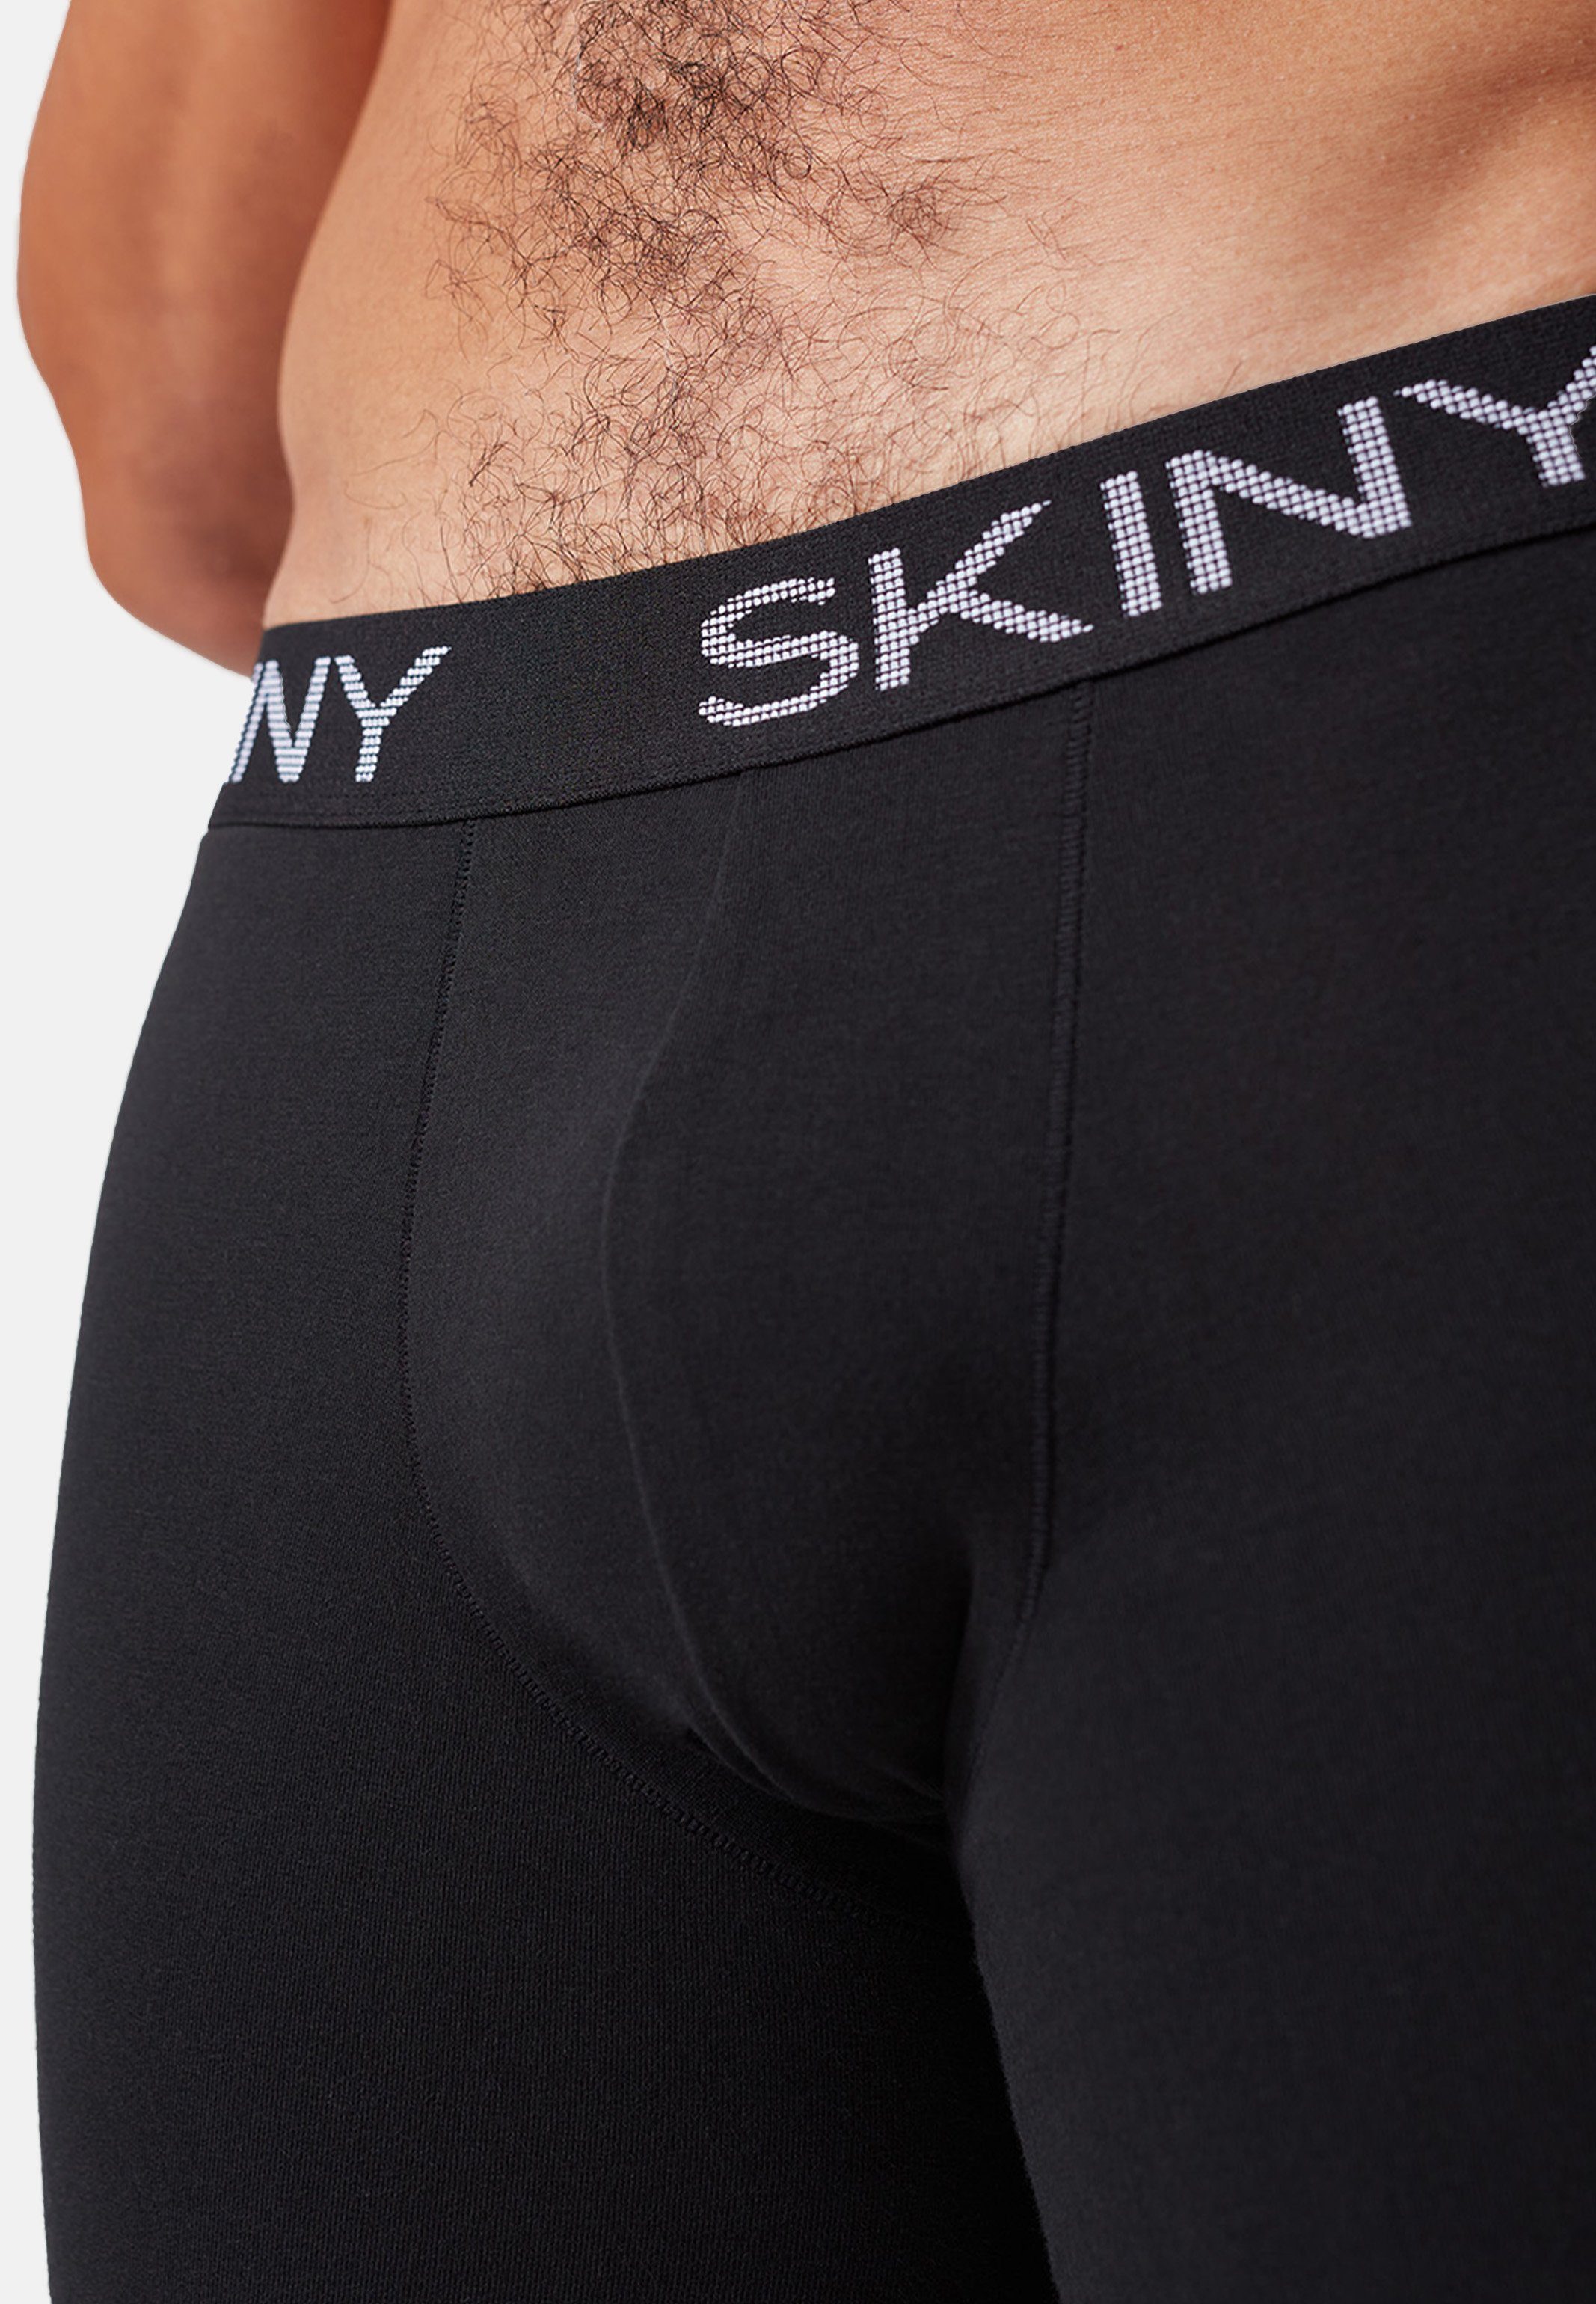 Skiny Pant - / Ohne - Boxer - Long Cotton Bein Baumwolle mit 2er Eingriff 2-St) Pant Retro Short Pack längerem (Spar-Set,